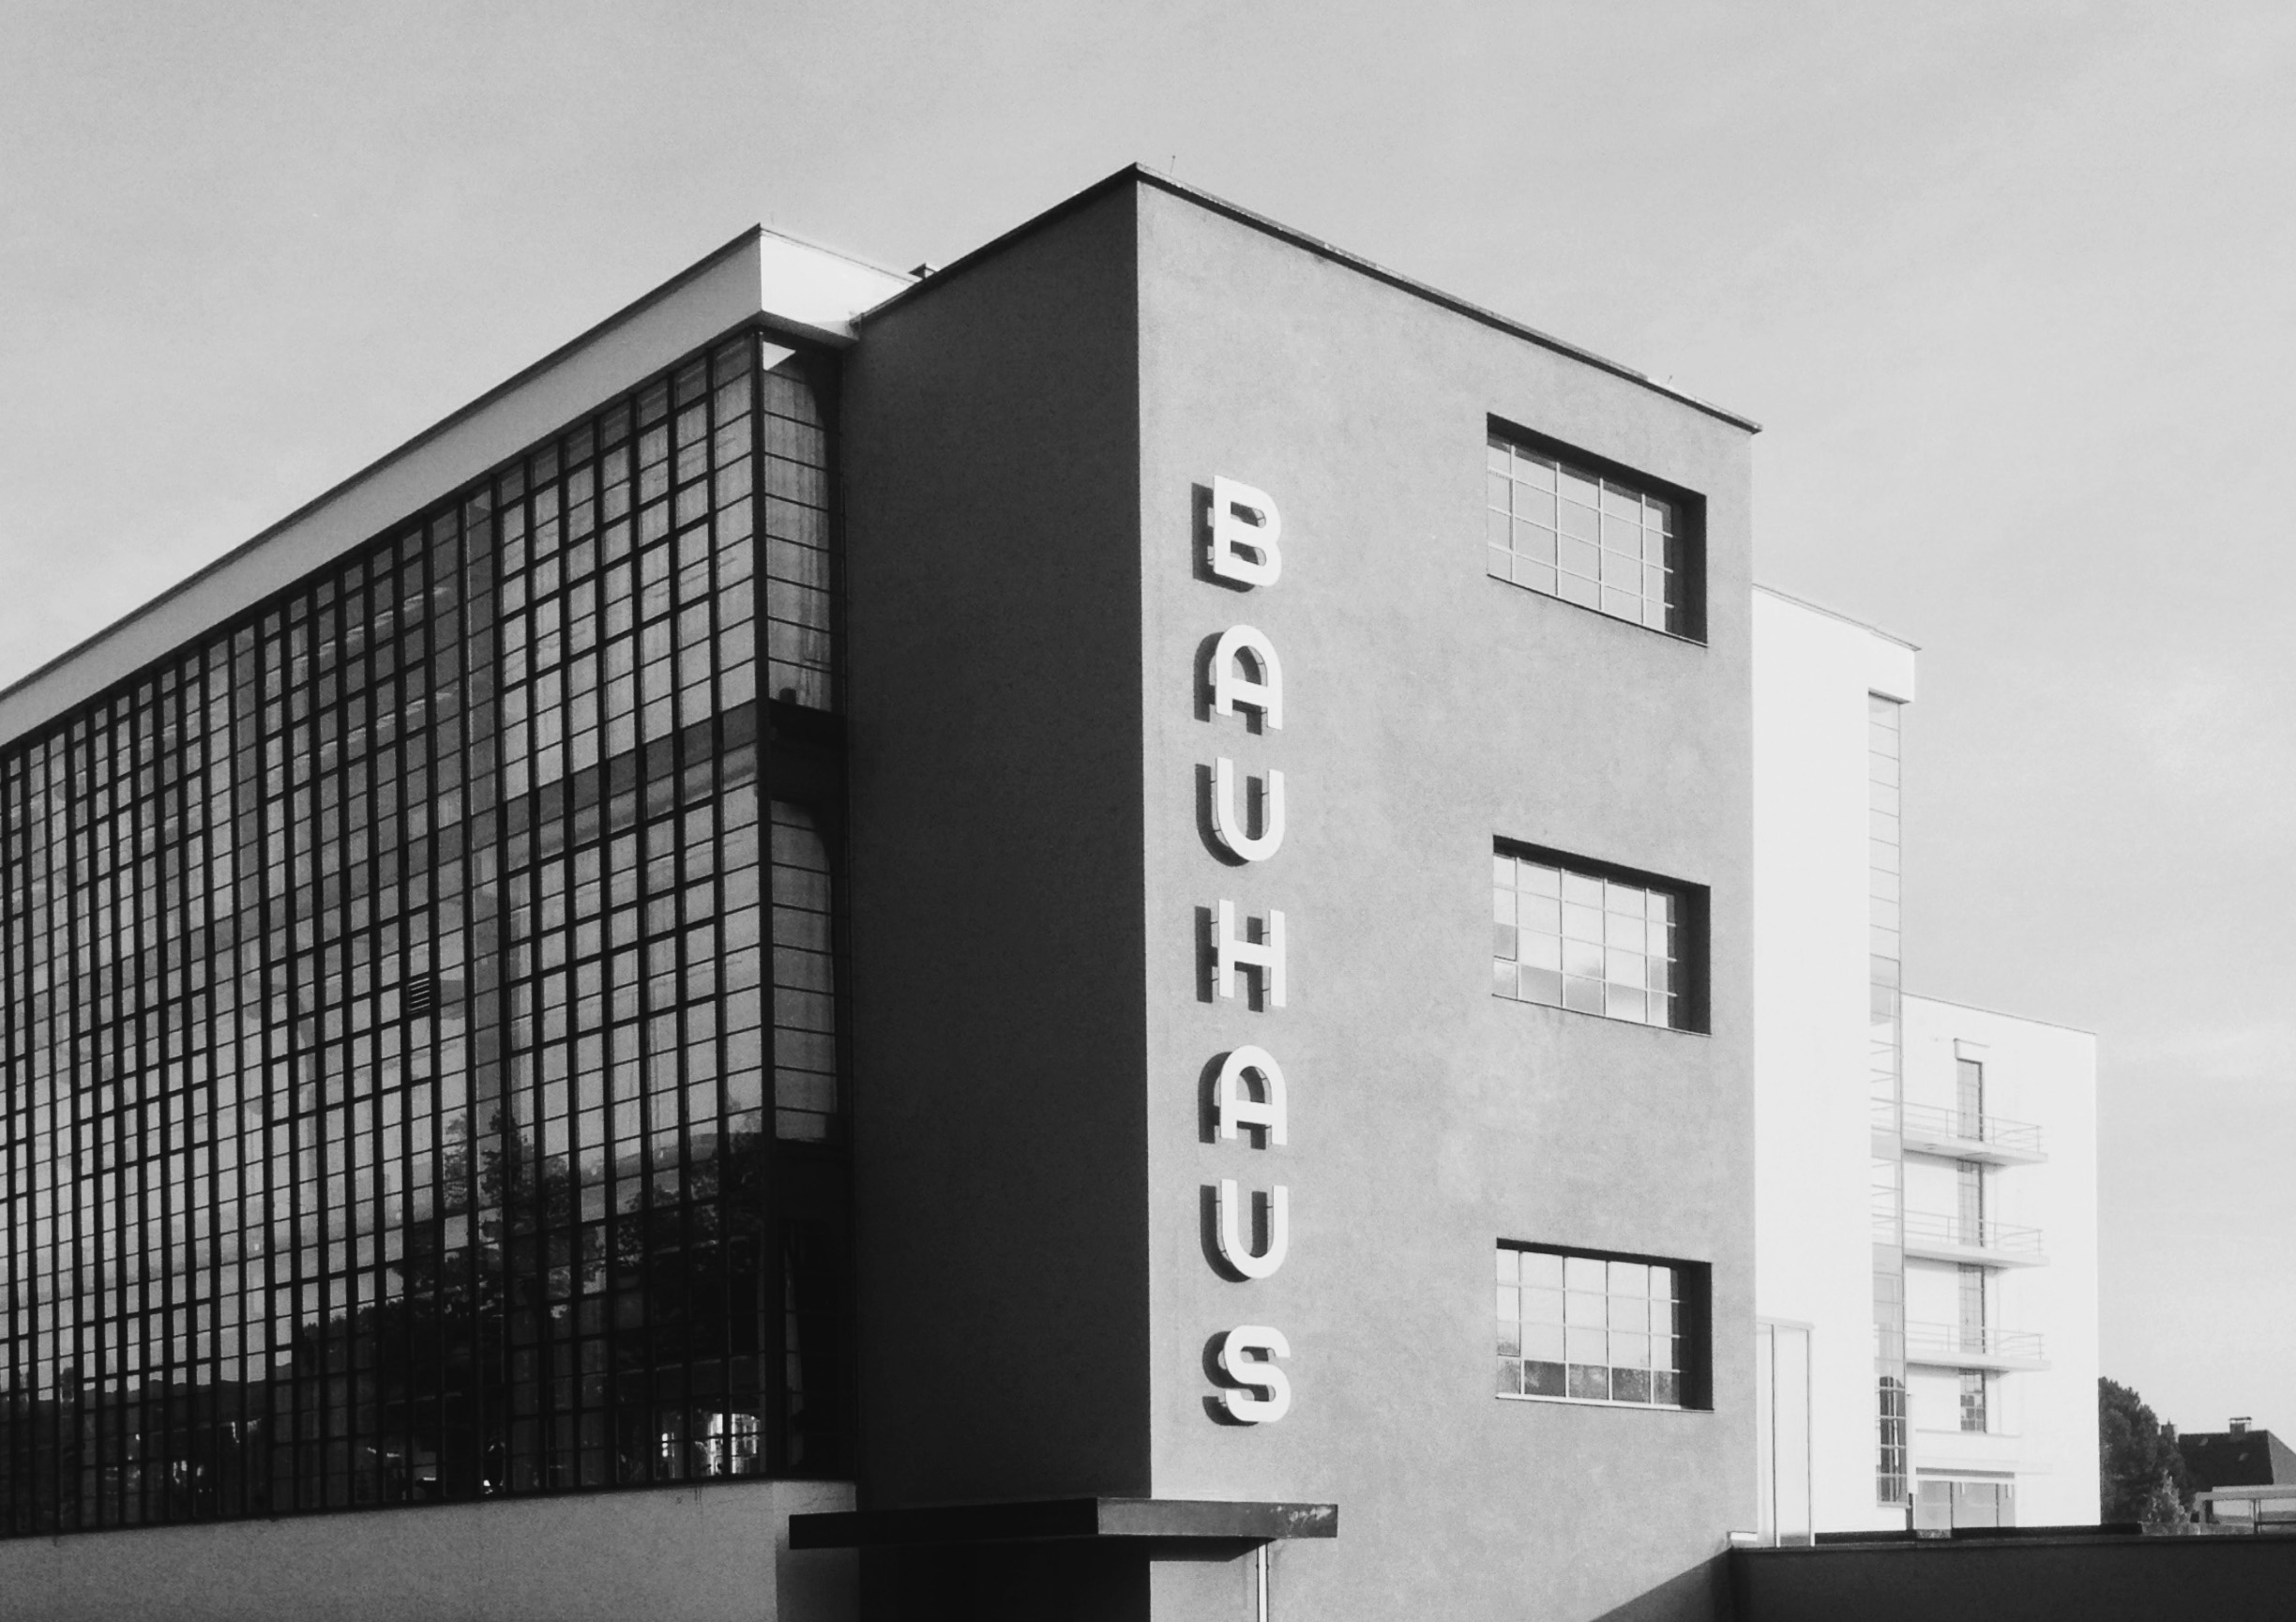 Bauhaus building in Dessau by architect Walter Gropius. Photographer: Glenn Garriock.